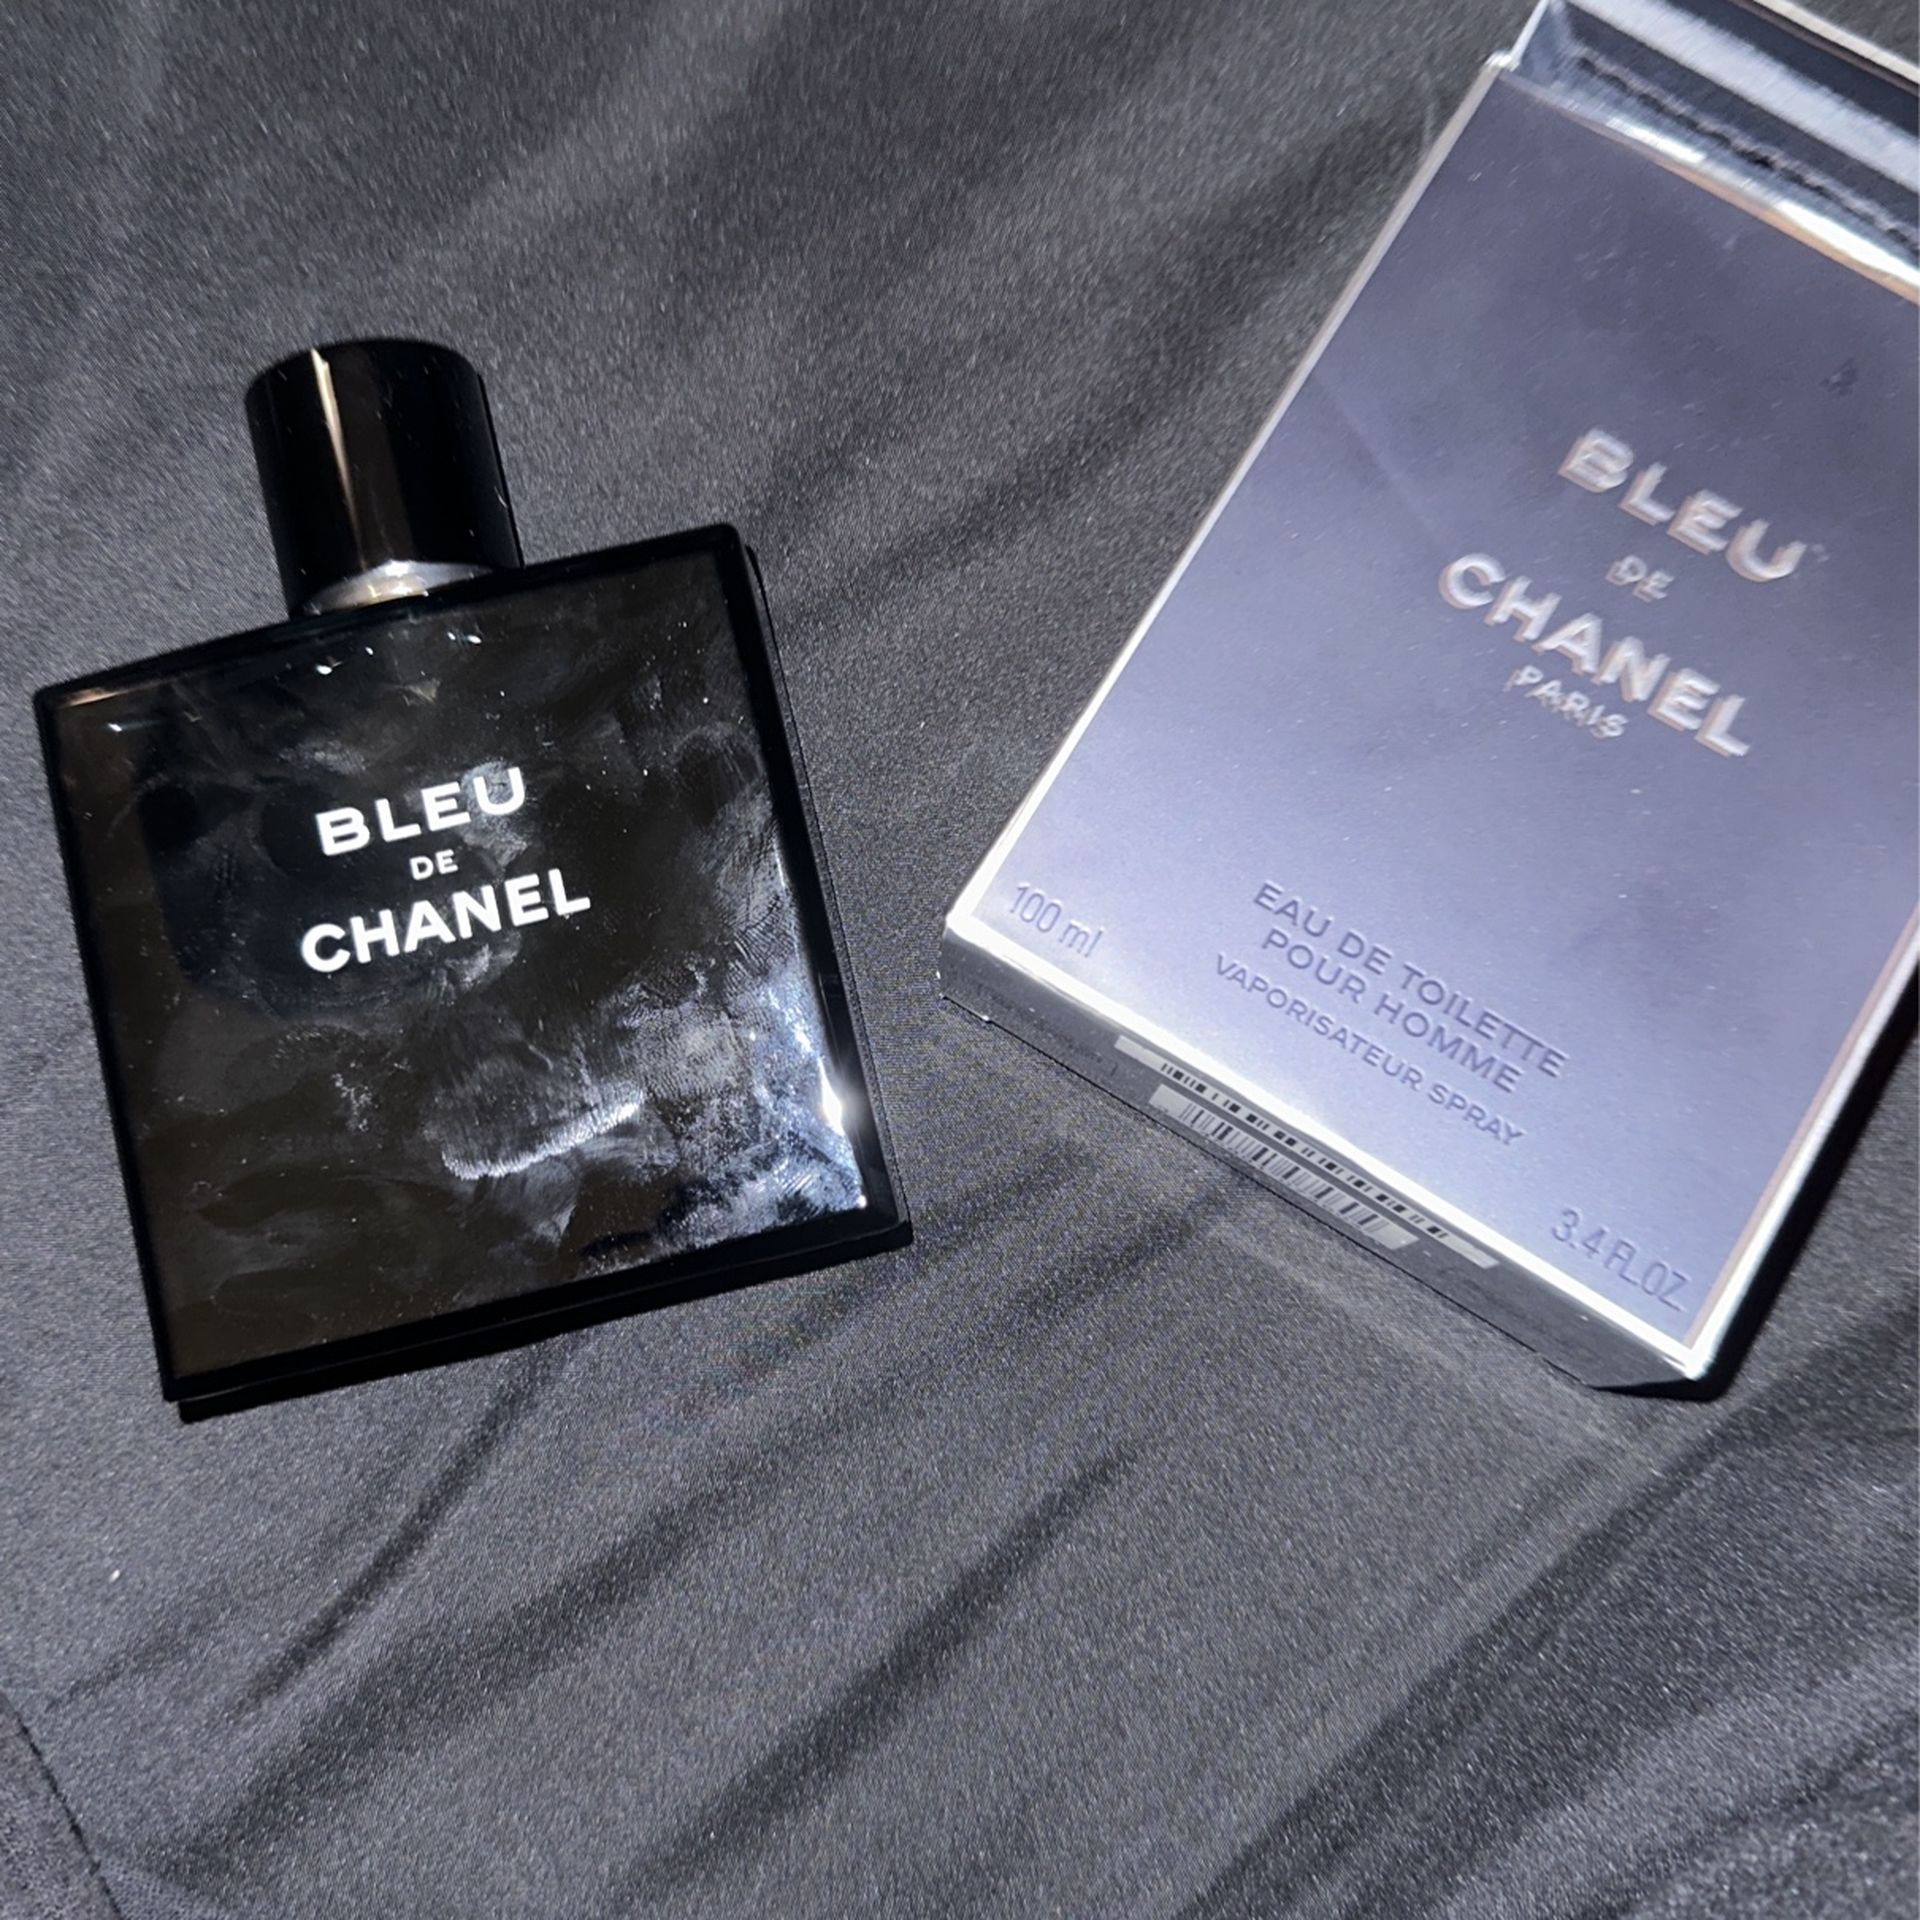 Bleu De Chanel Cologne Like 80 Percent Full Prob